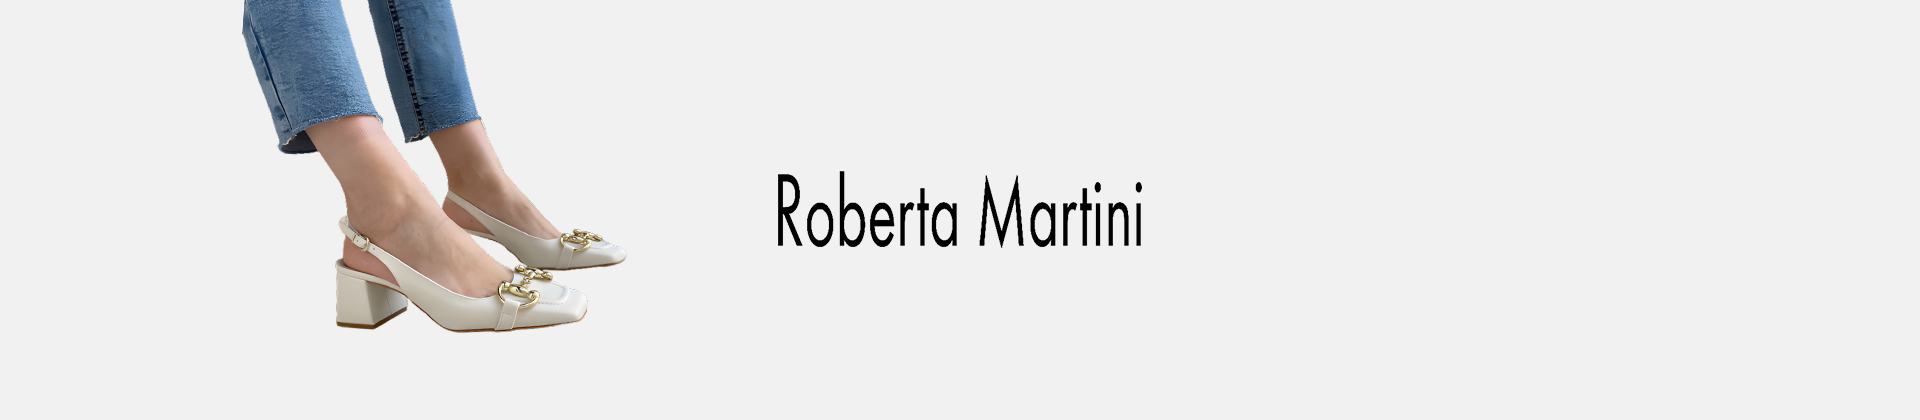 Roberta Martini scarpe donna online